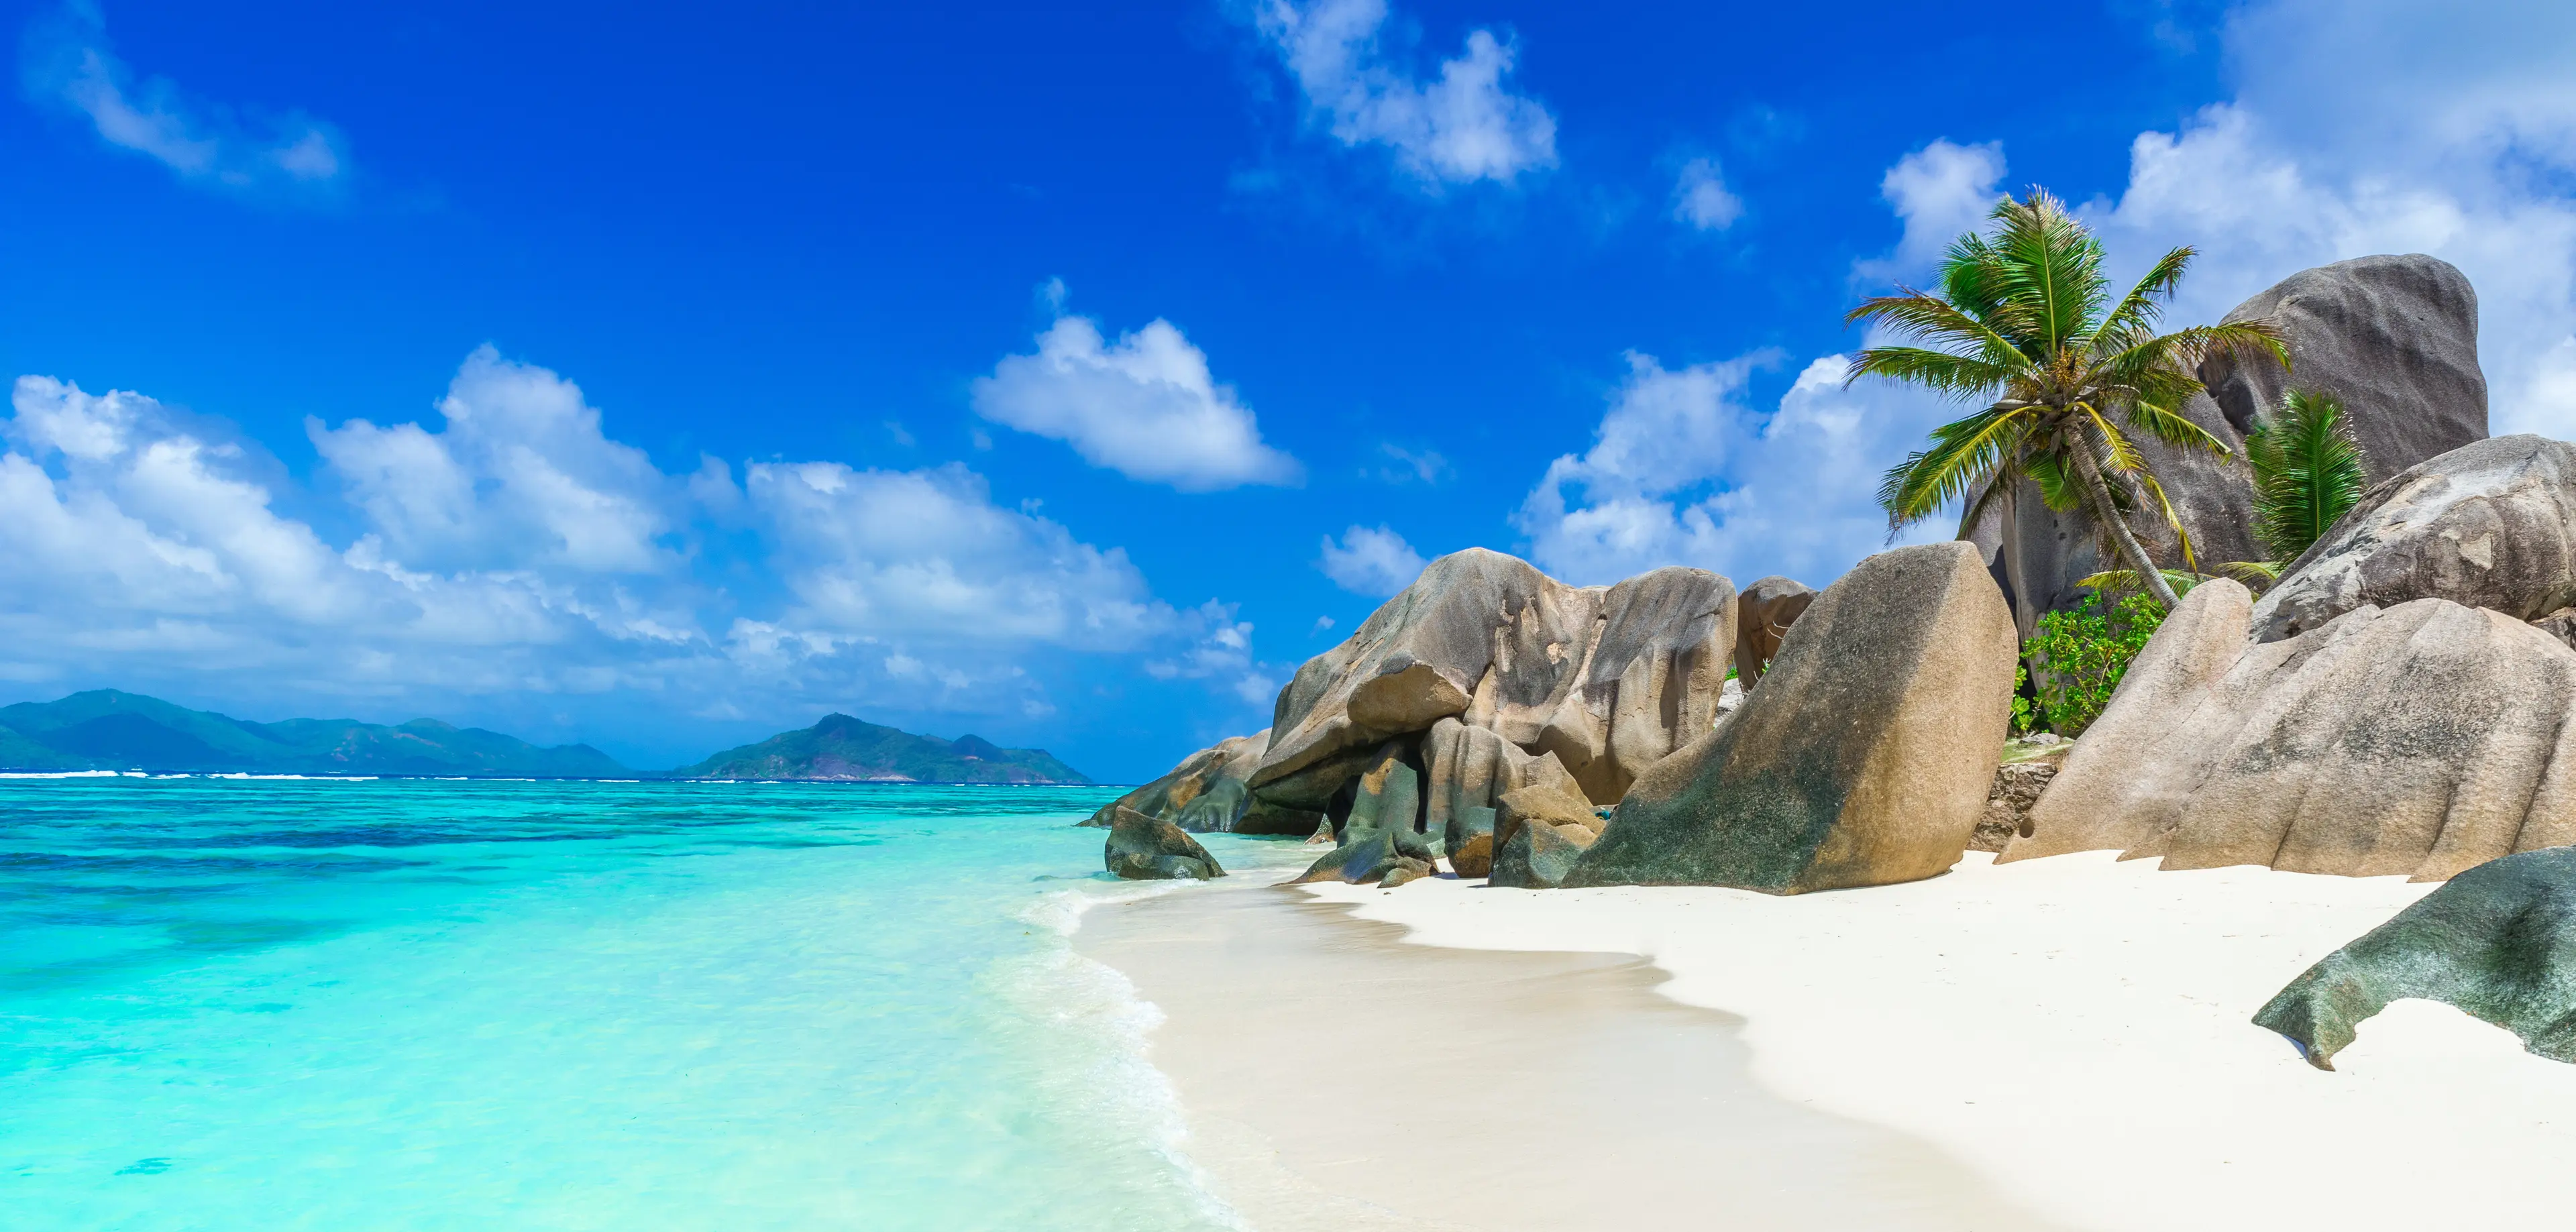 2-Day Exquisite Getaway to Seychelles